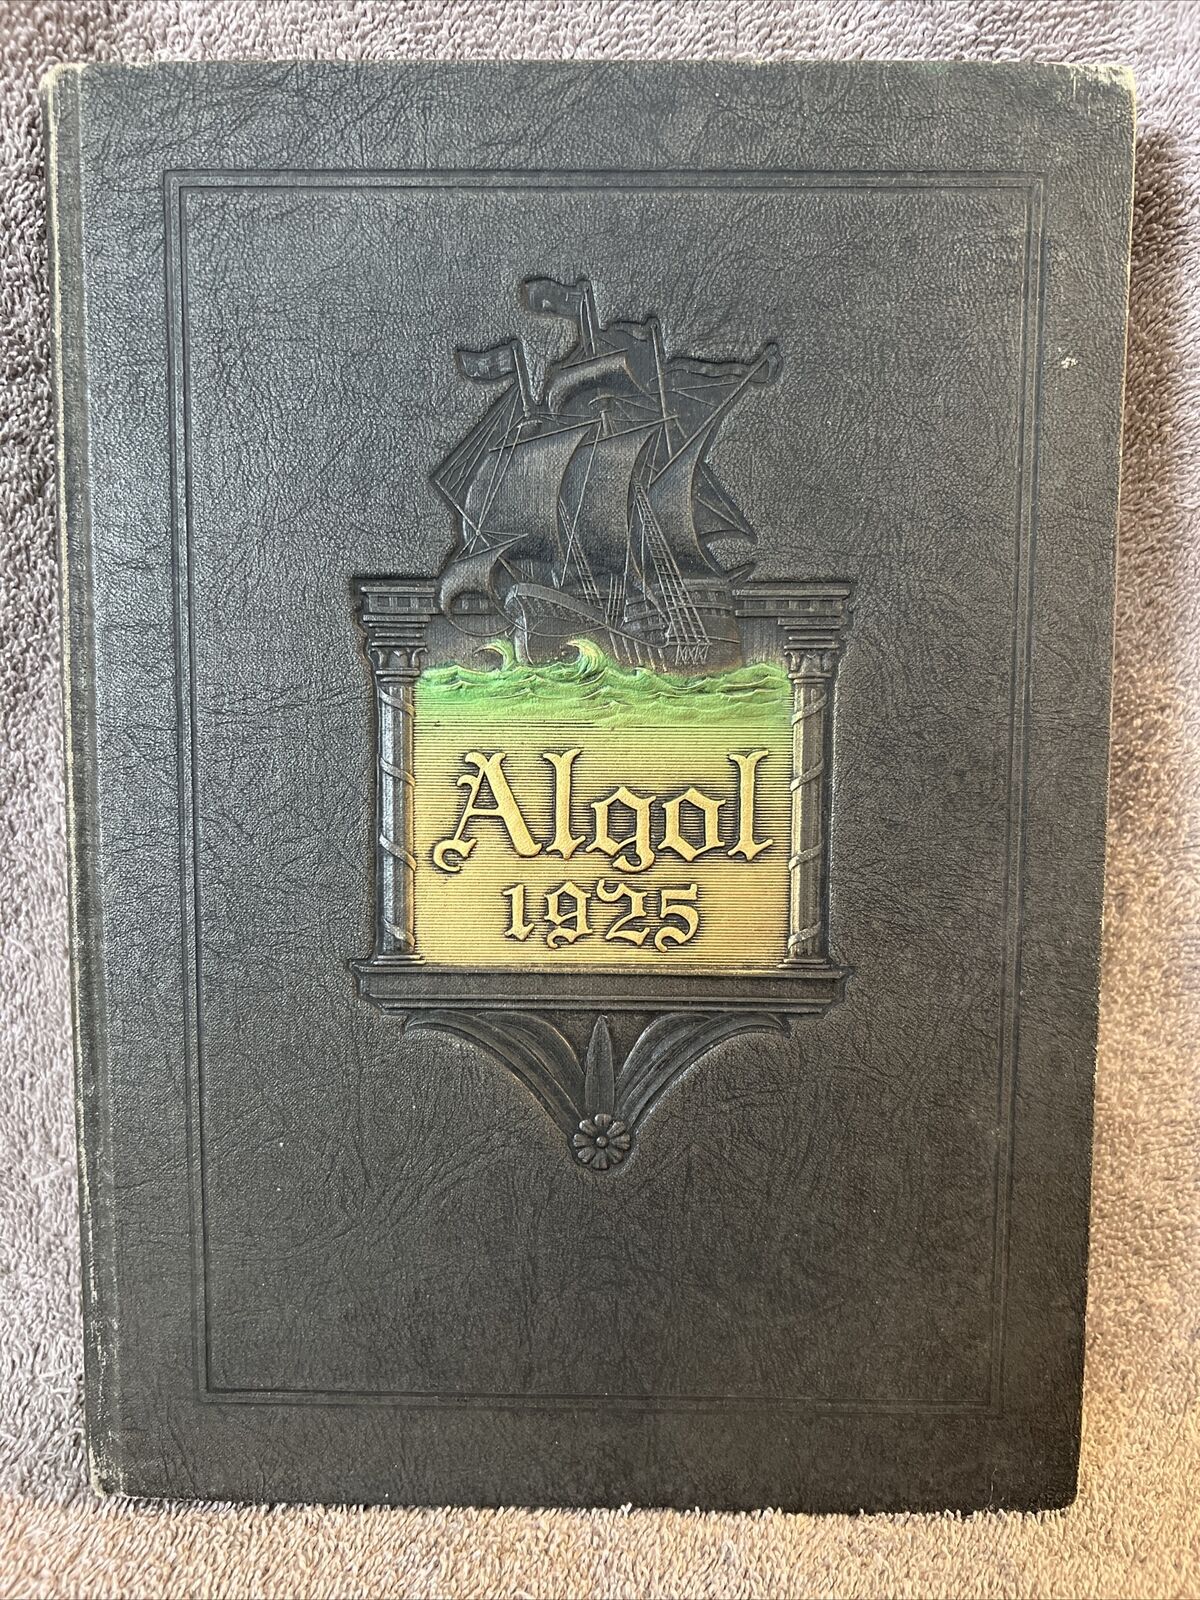 CARLETON COLLEGE, ALGOL, 1925 North field, MN Yearbook